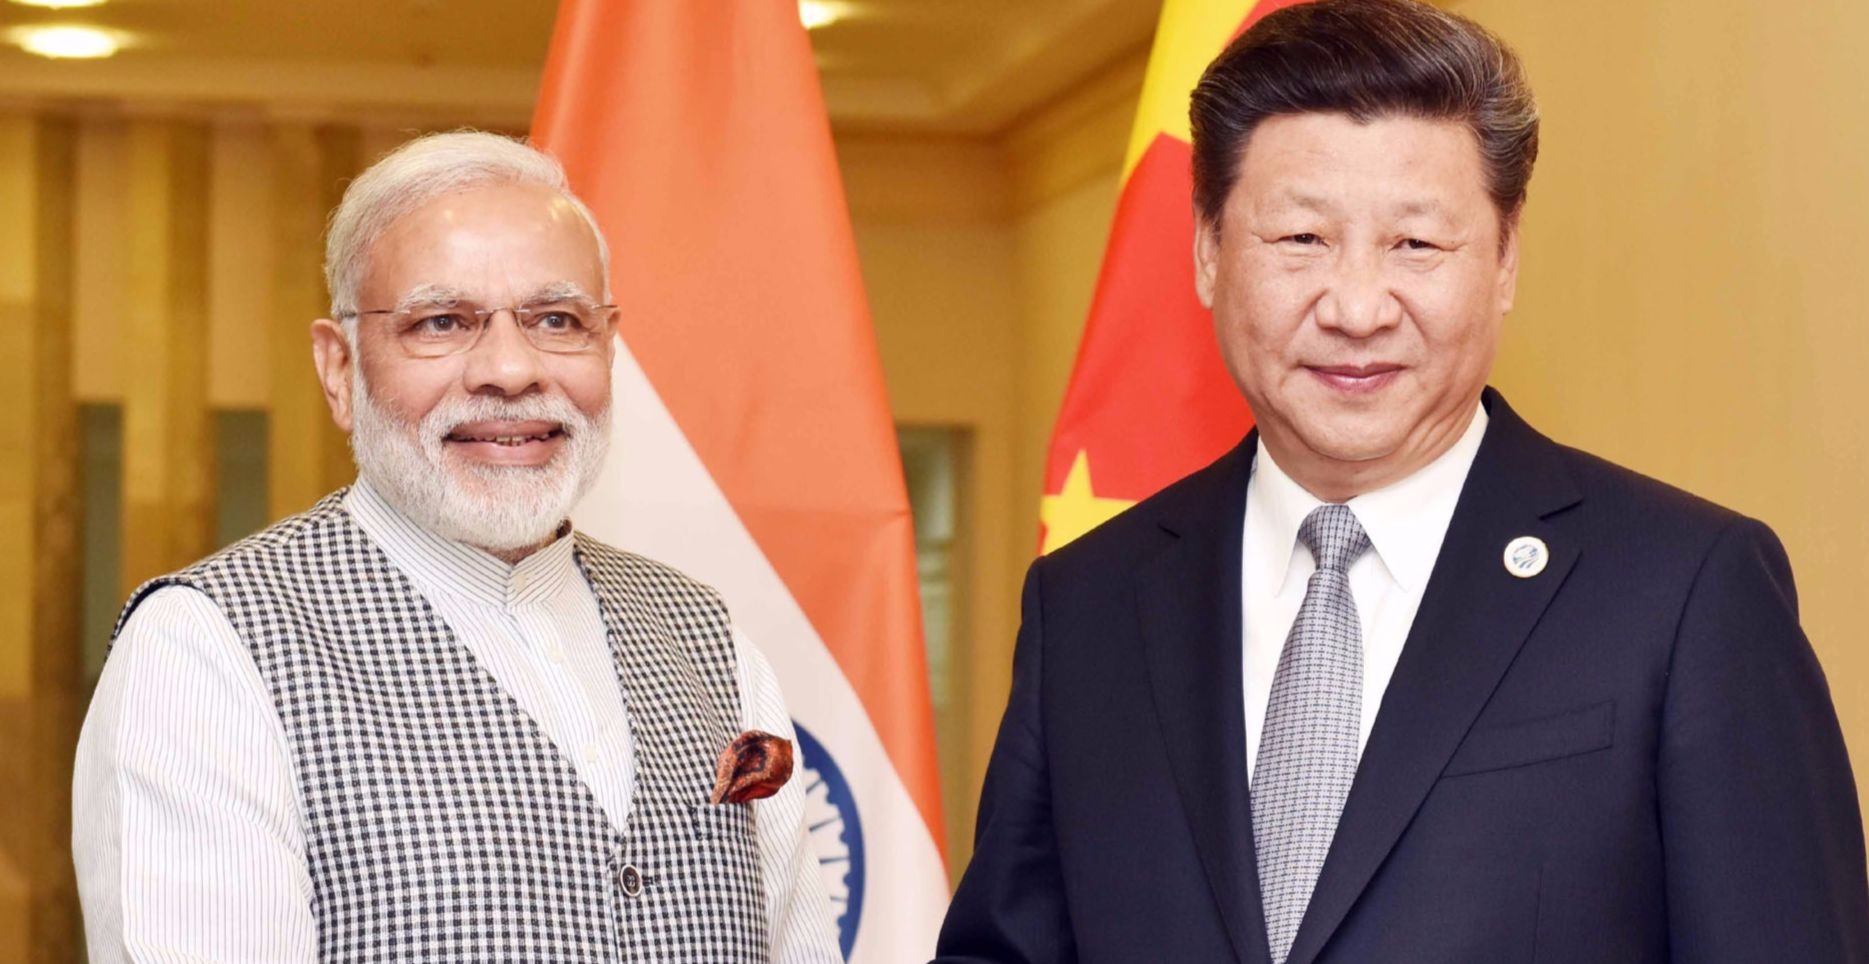 Prime Minister Modi and President Xi Jinping